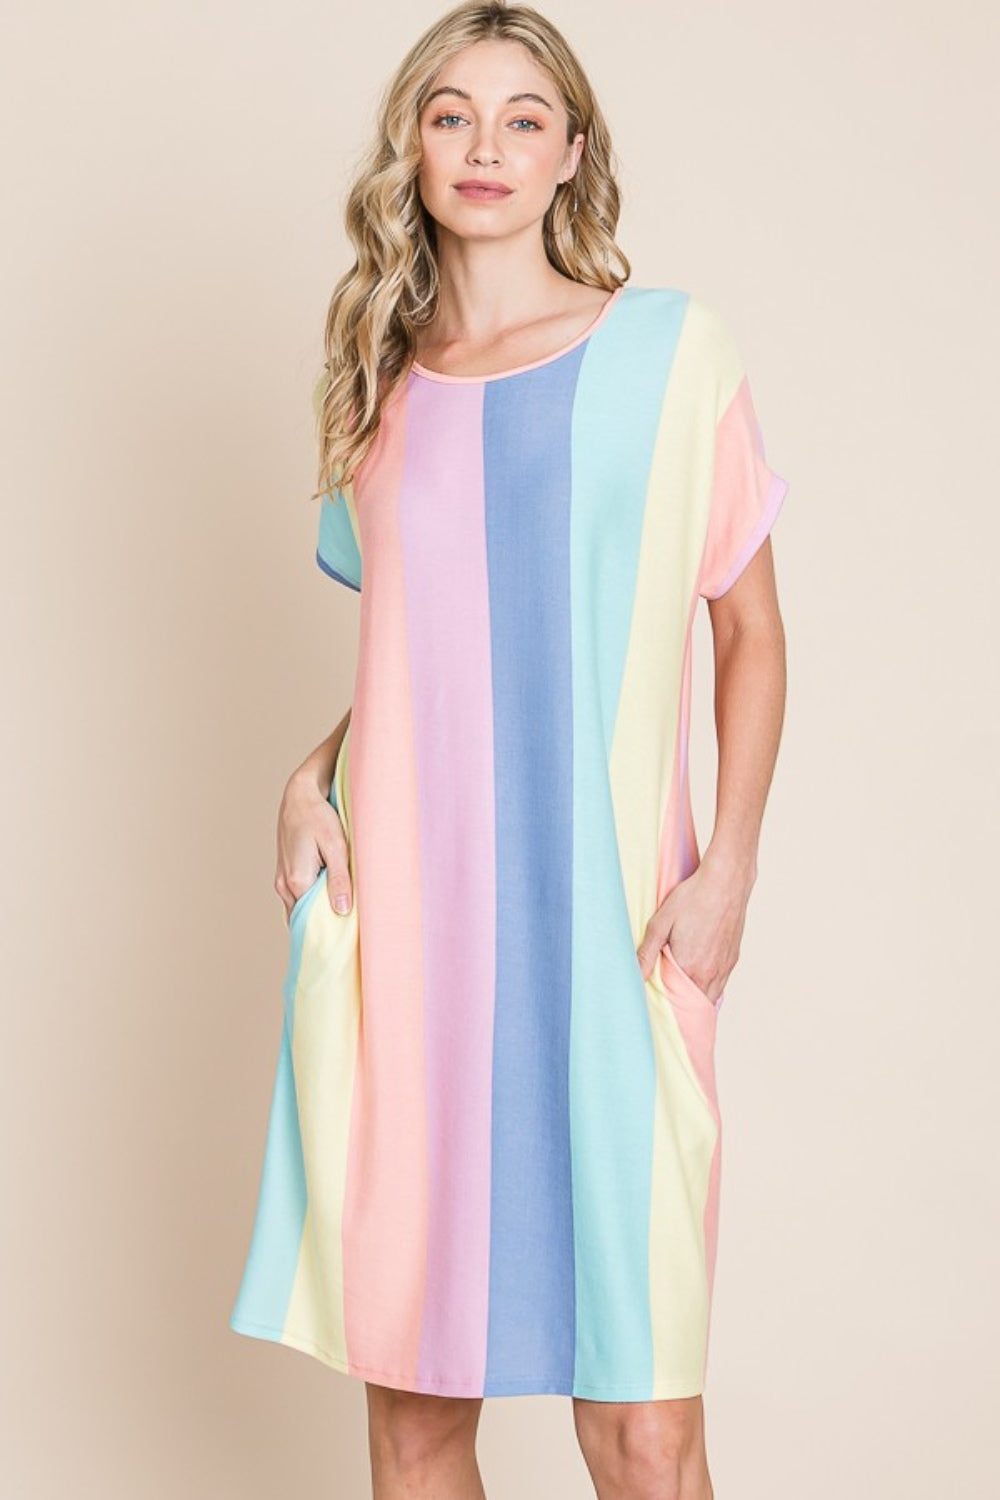 Pastel Rainbow Dress - Joy & Country